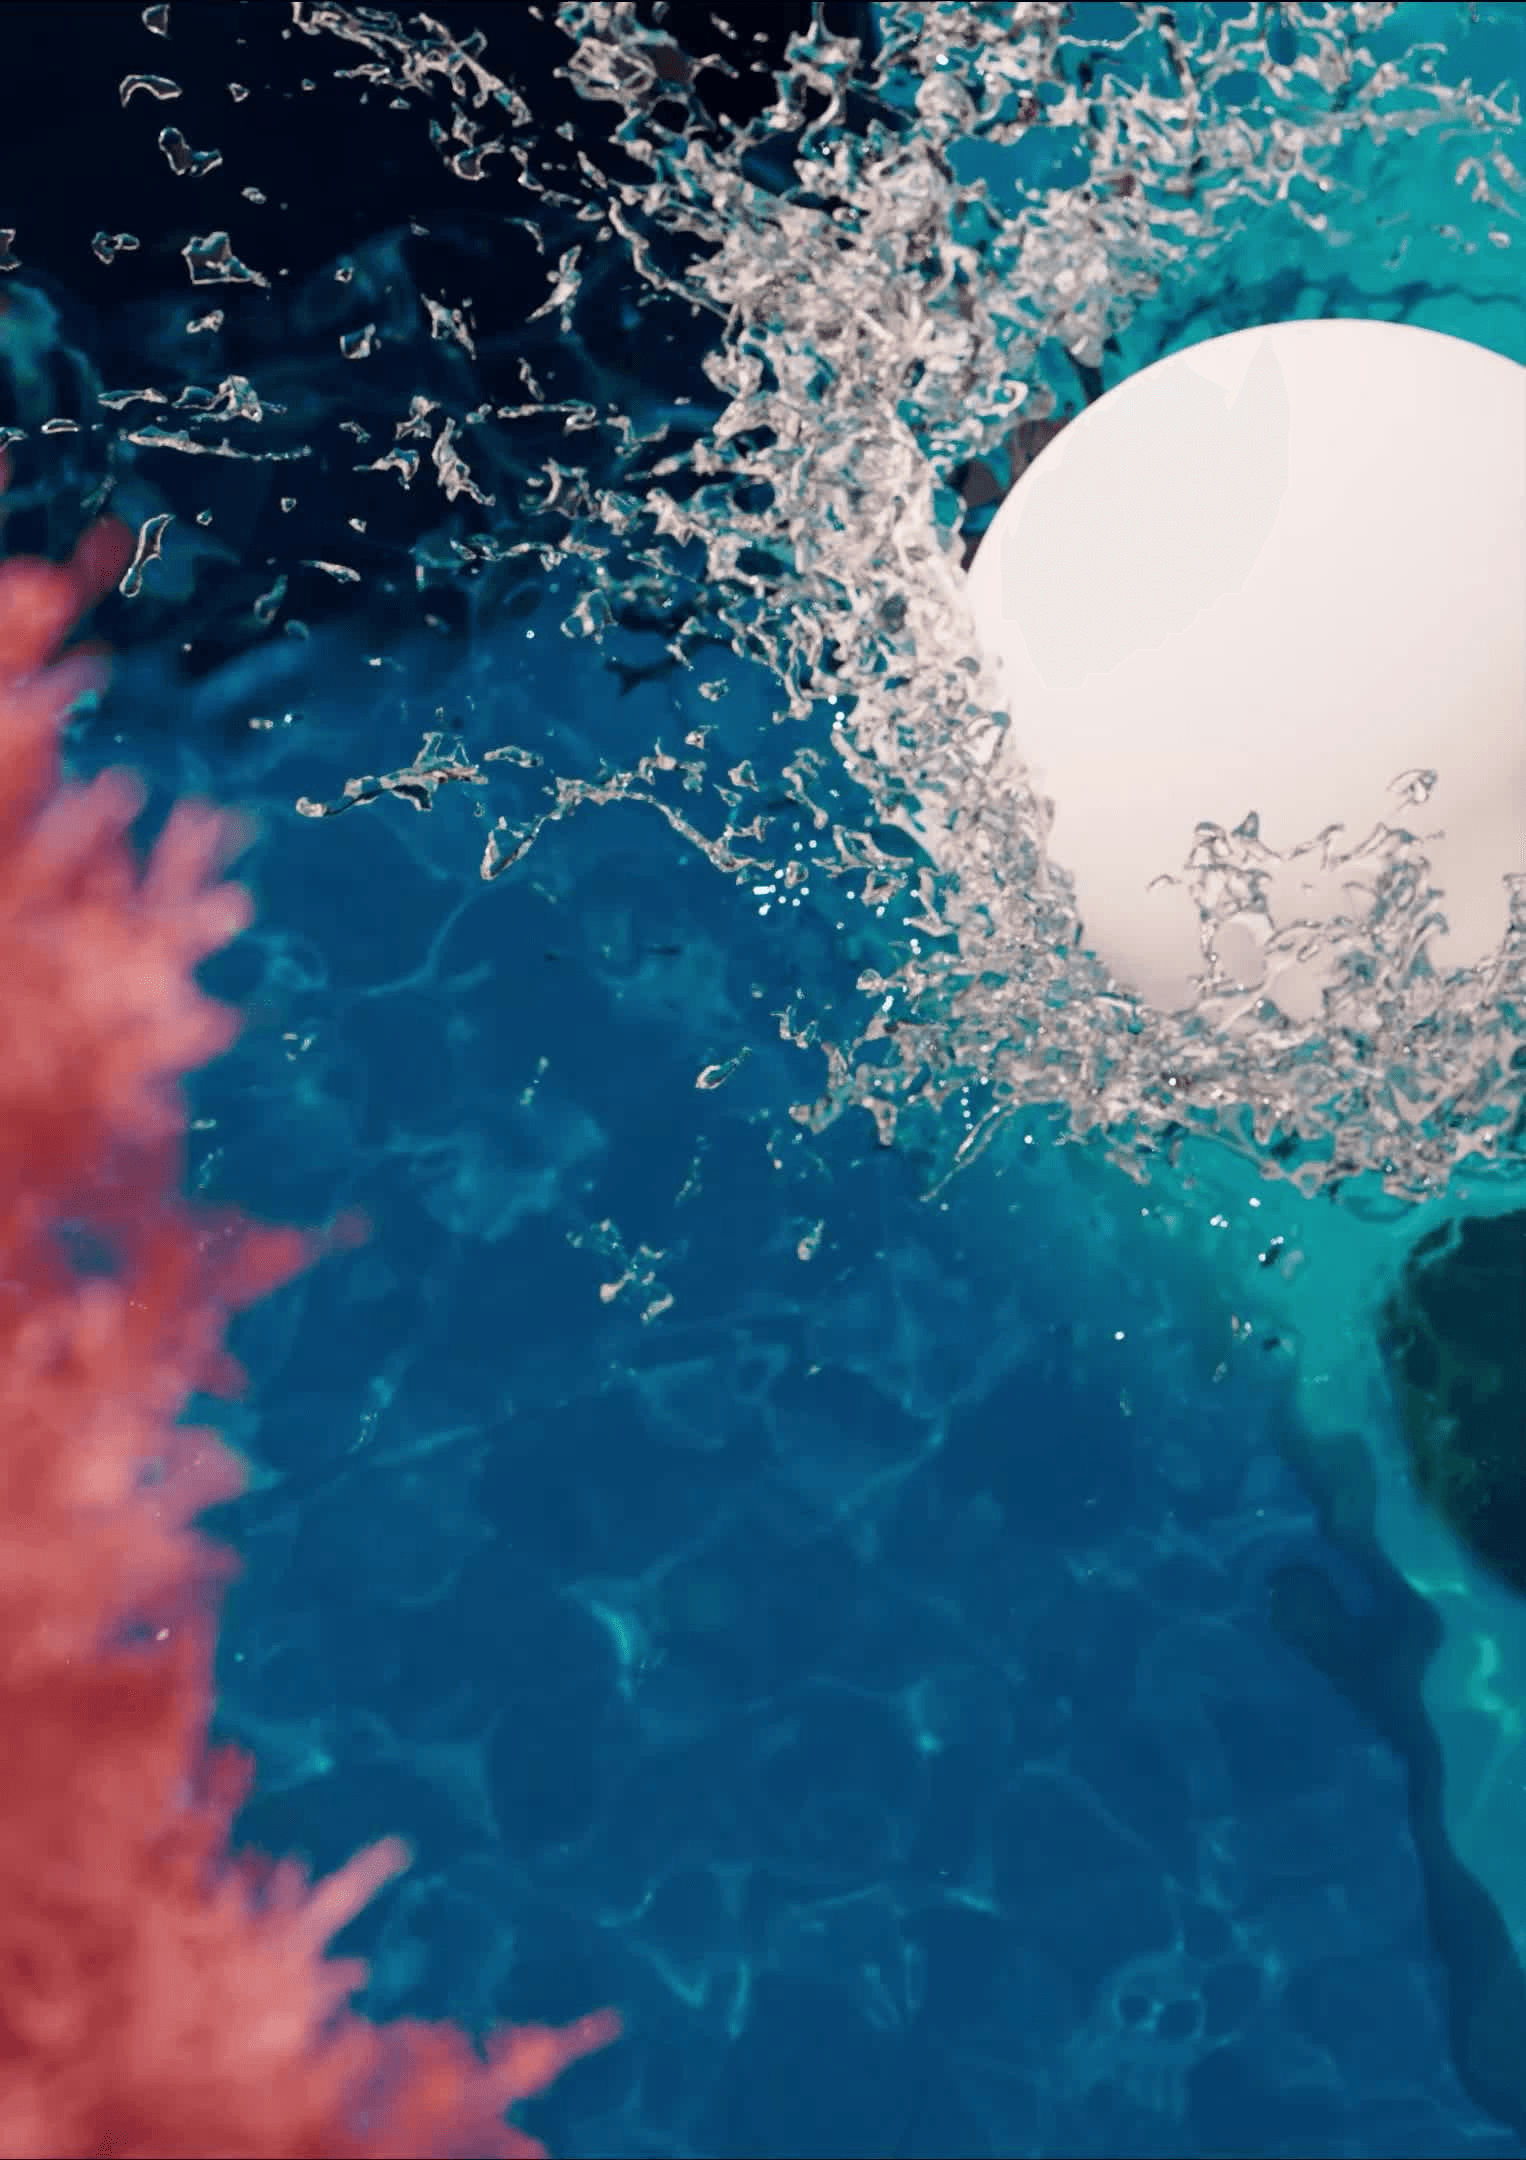 The Splash #1/20